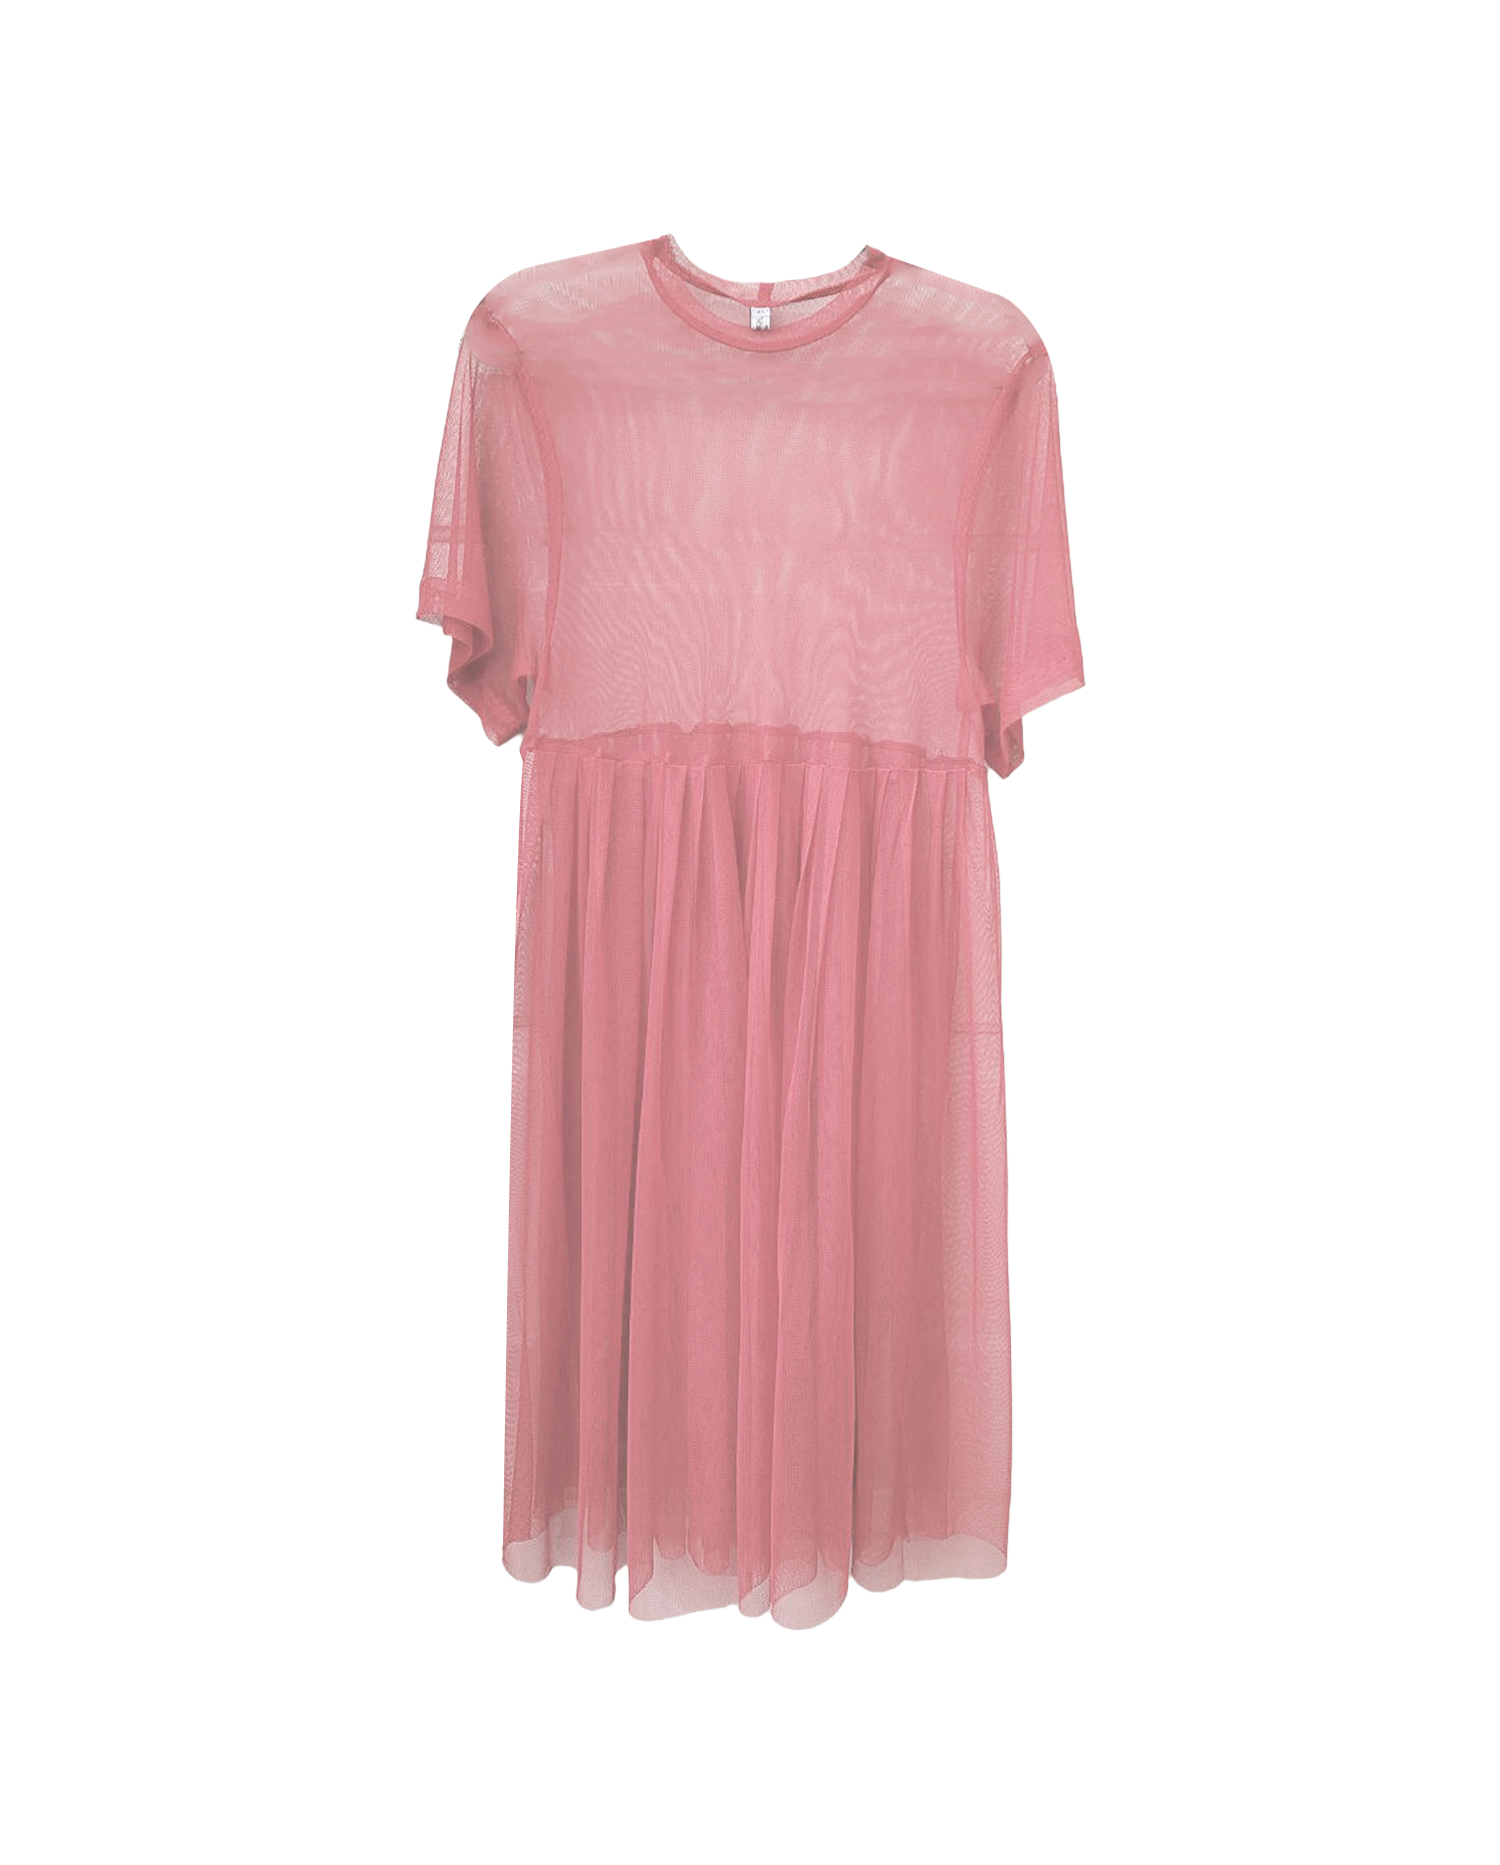 Dâ Basic Pink Mesh Dress